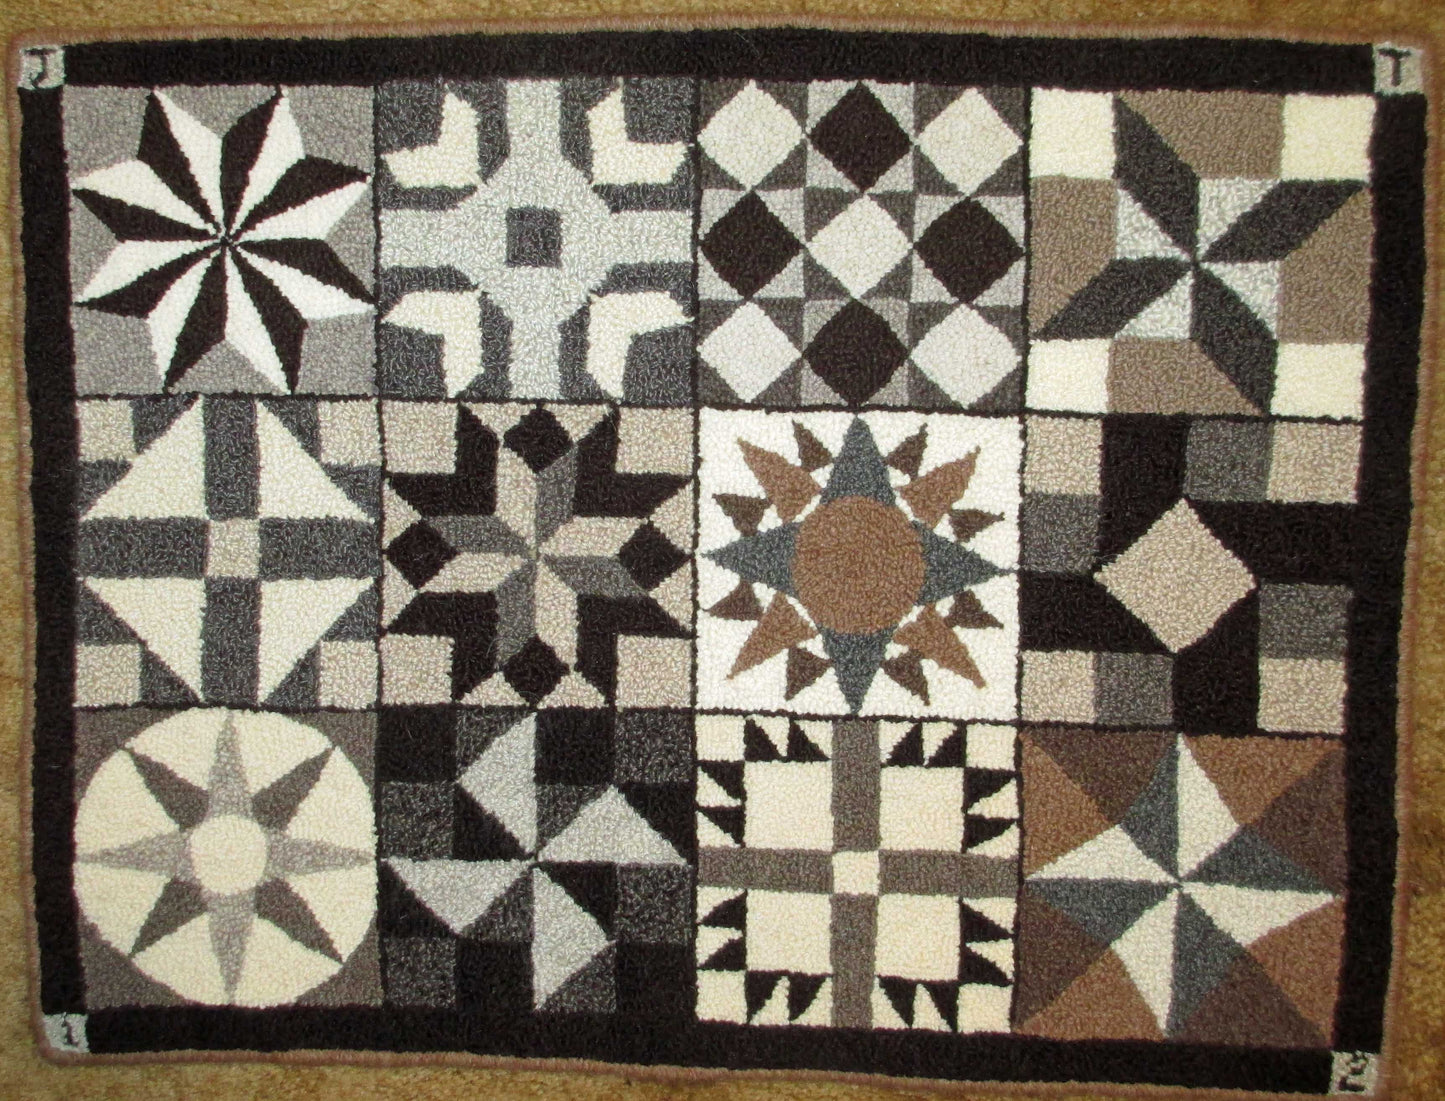 Block Party Pattern on linen, 23.5"x30"